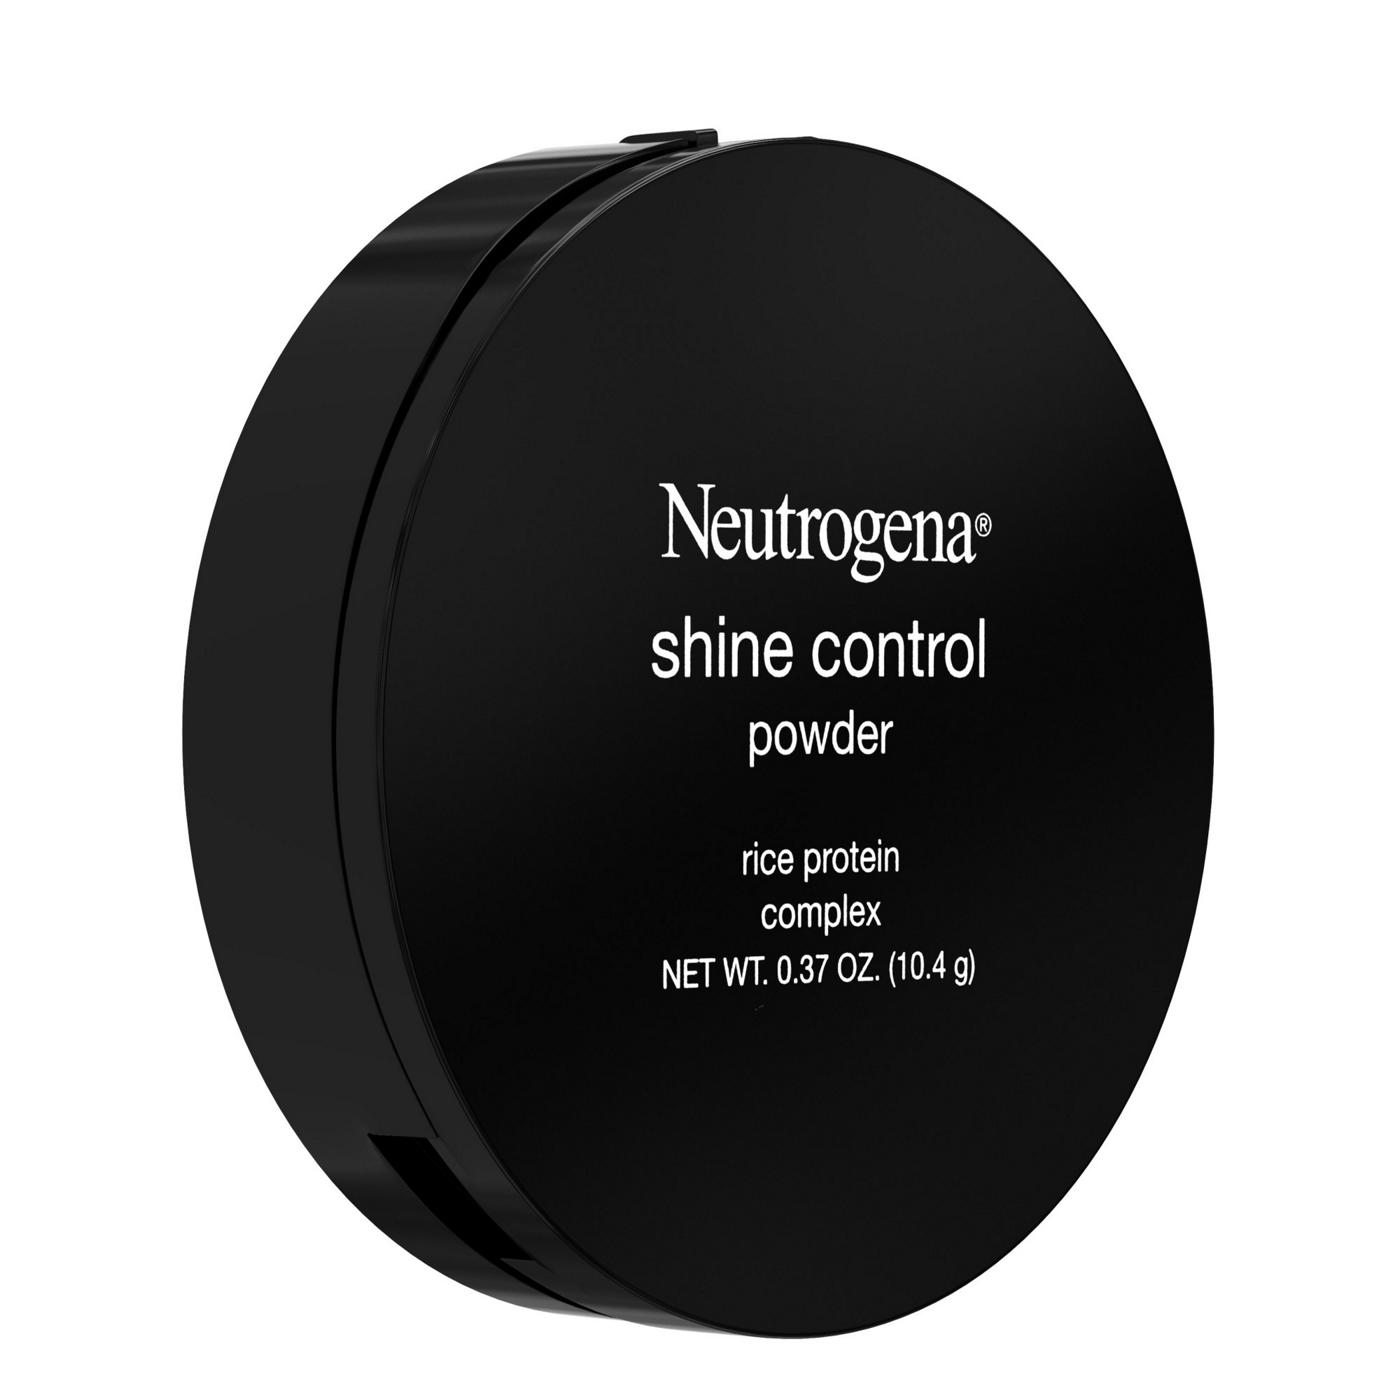 Neutrogena Shine Control Powder; image 4 of 6